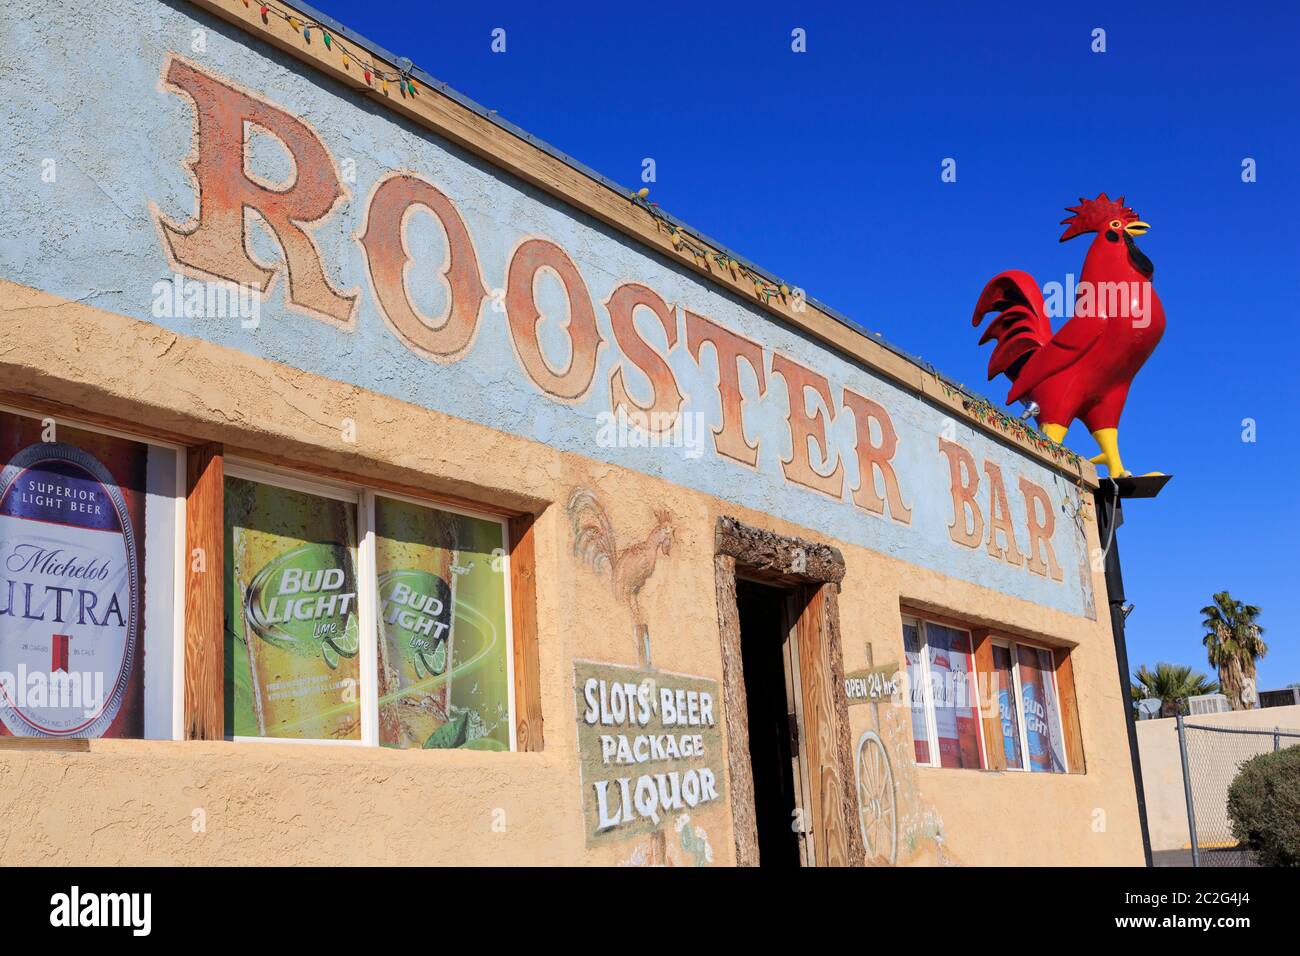 Red Rooster Bar, Overton, Nevada, États-Unis Banque D'Images